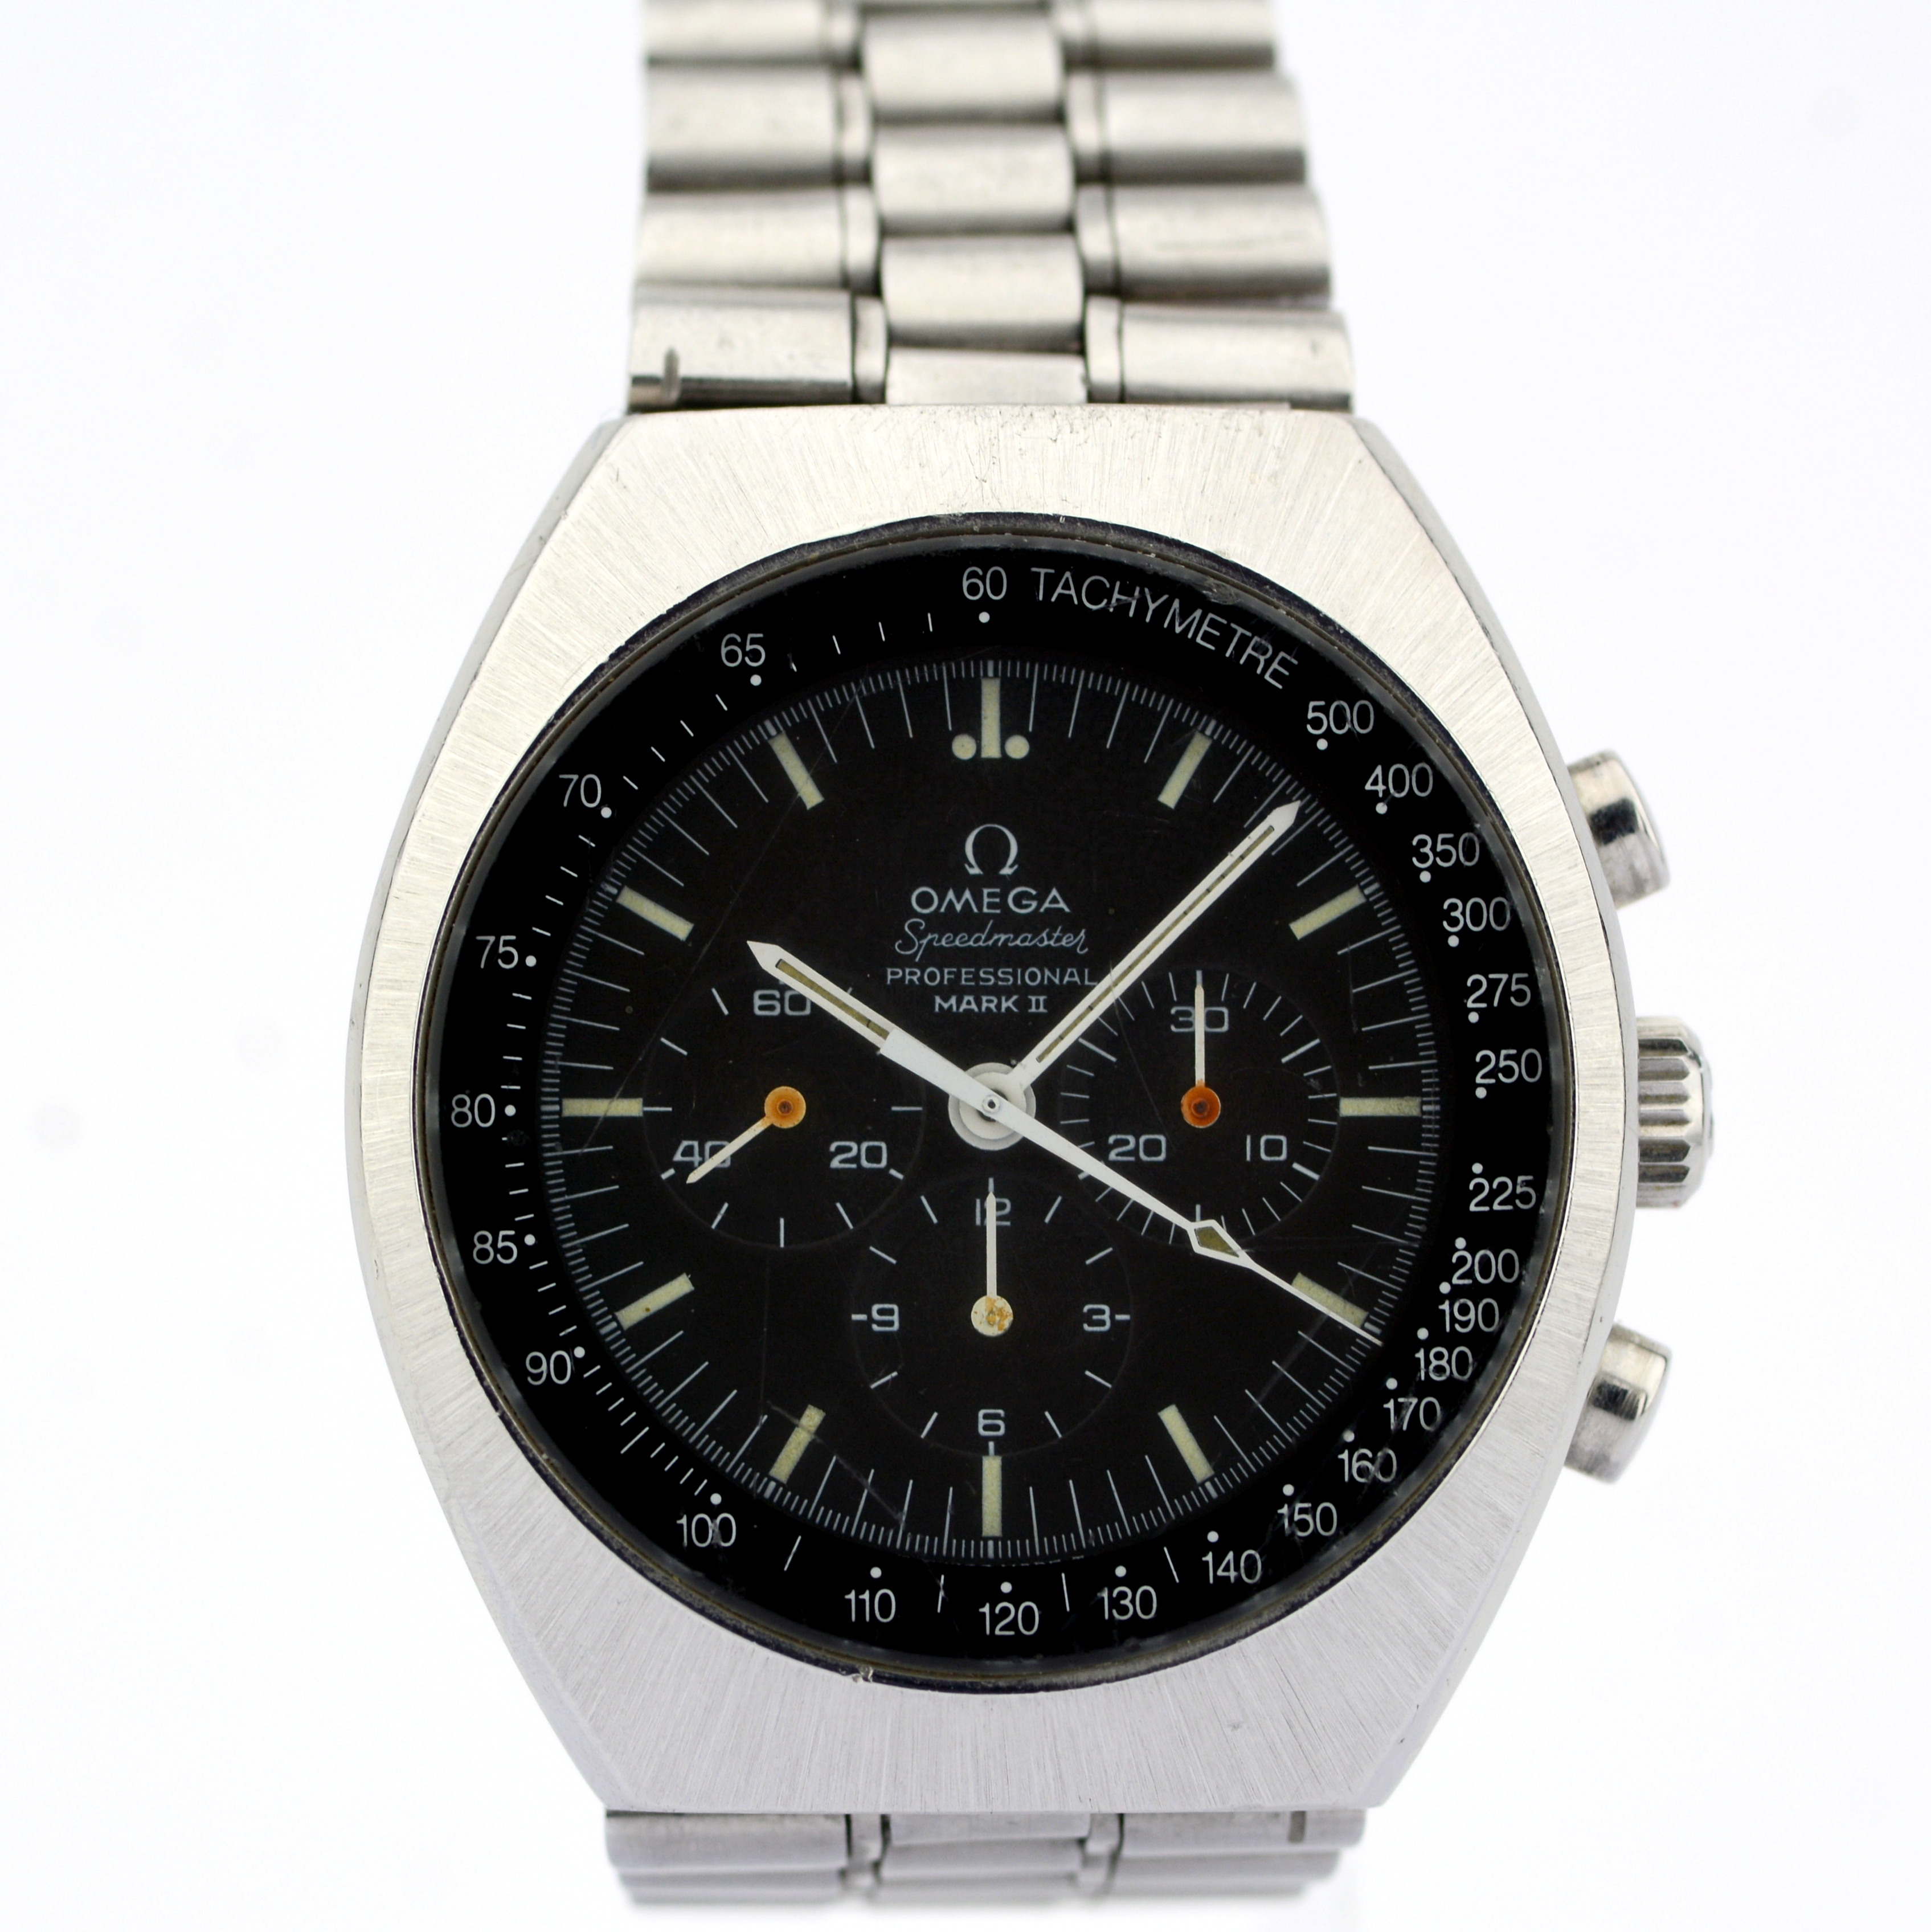 Omega / Speedmaster Mark II - Gentlmen's Steel Wrist Watch - Image 2 of 7